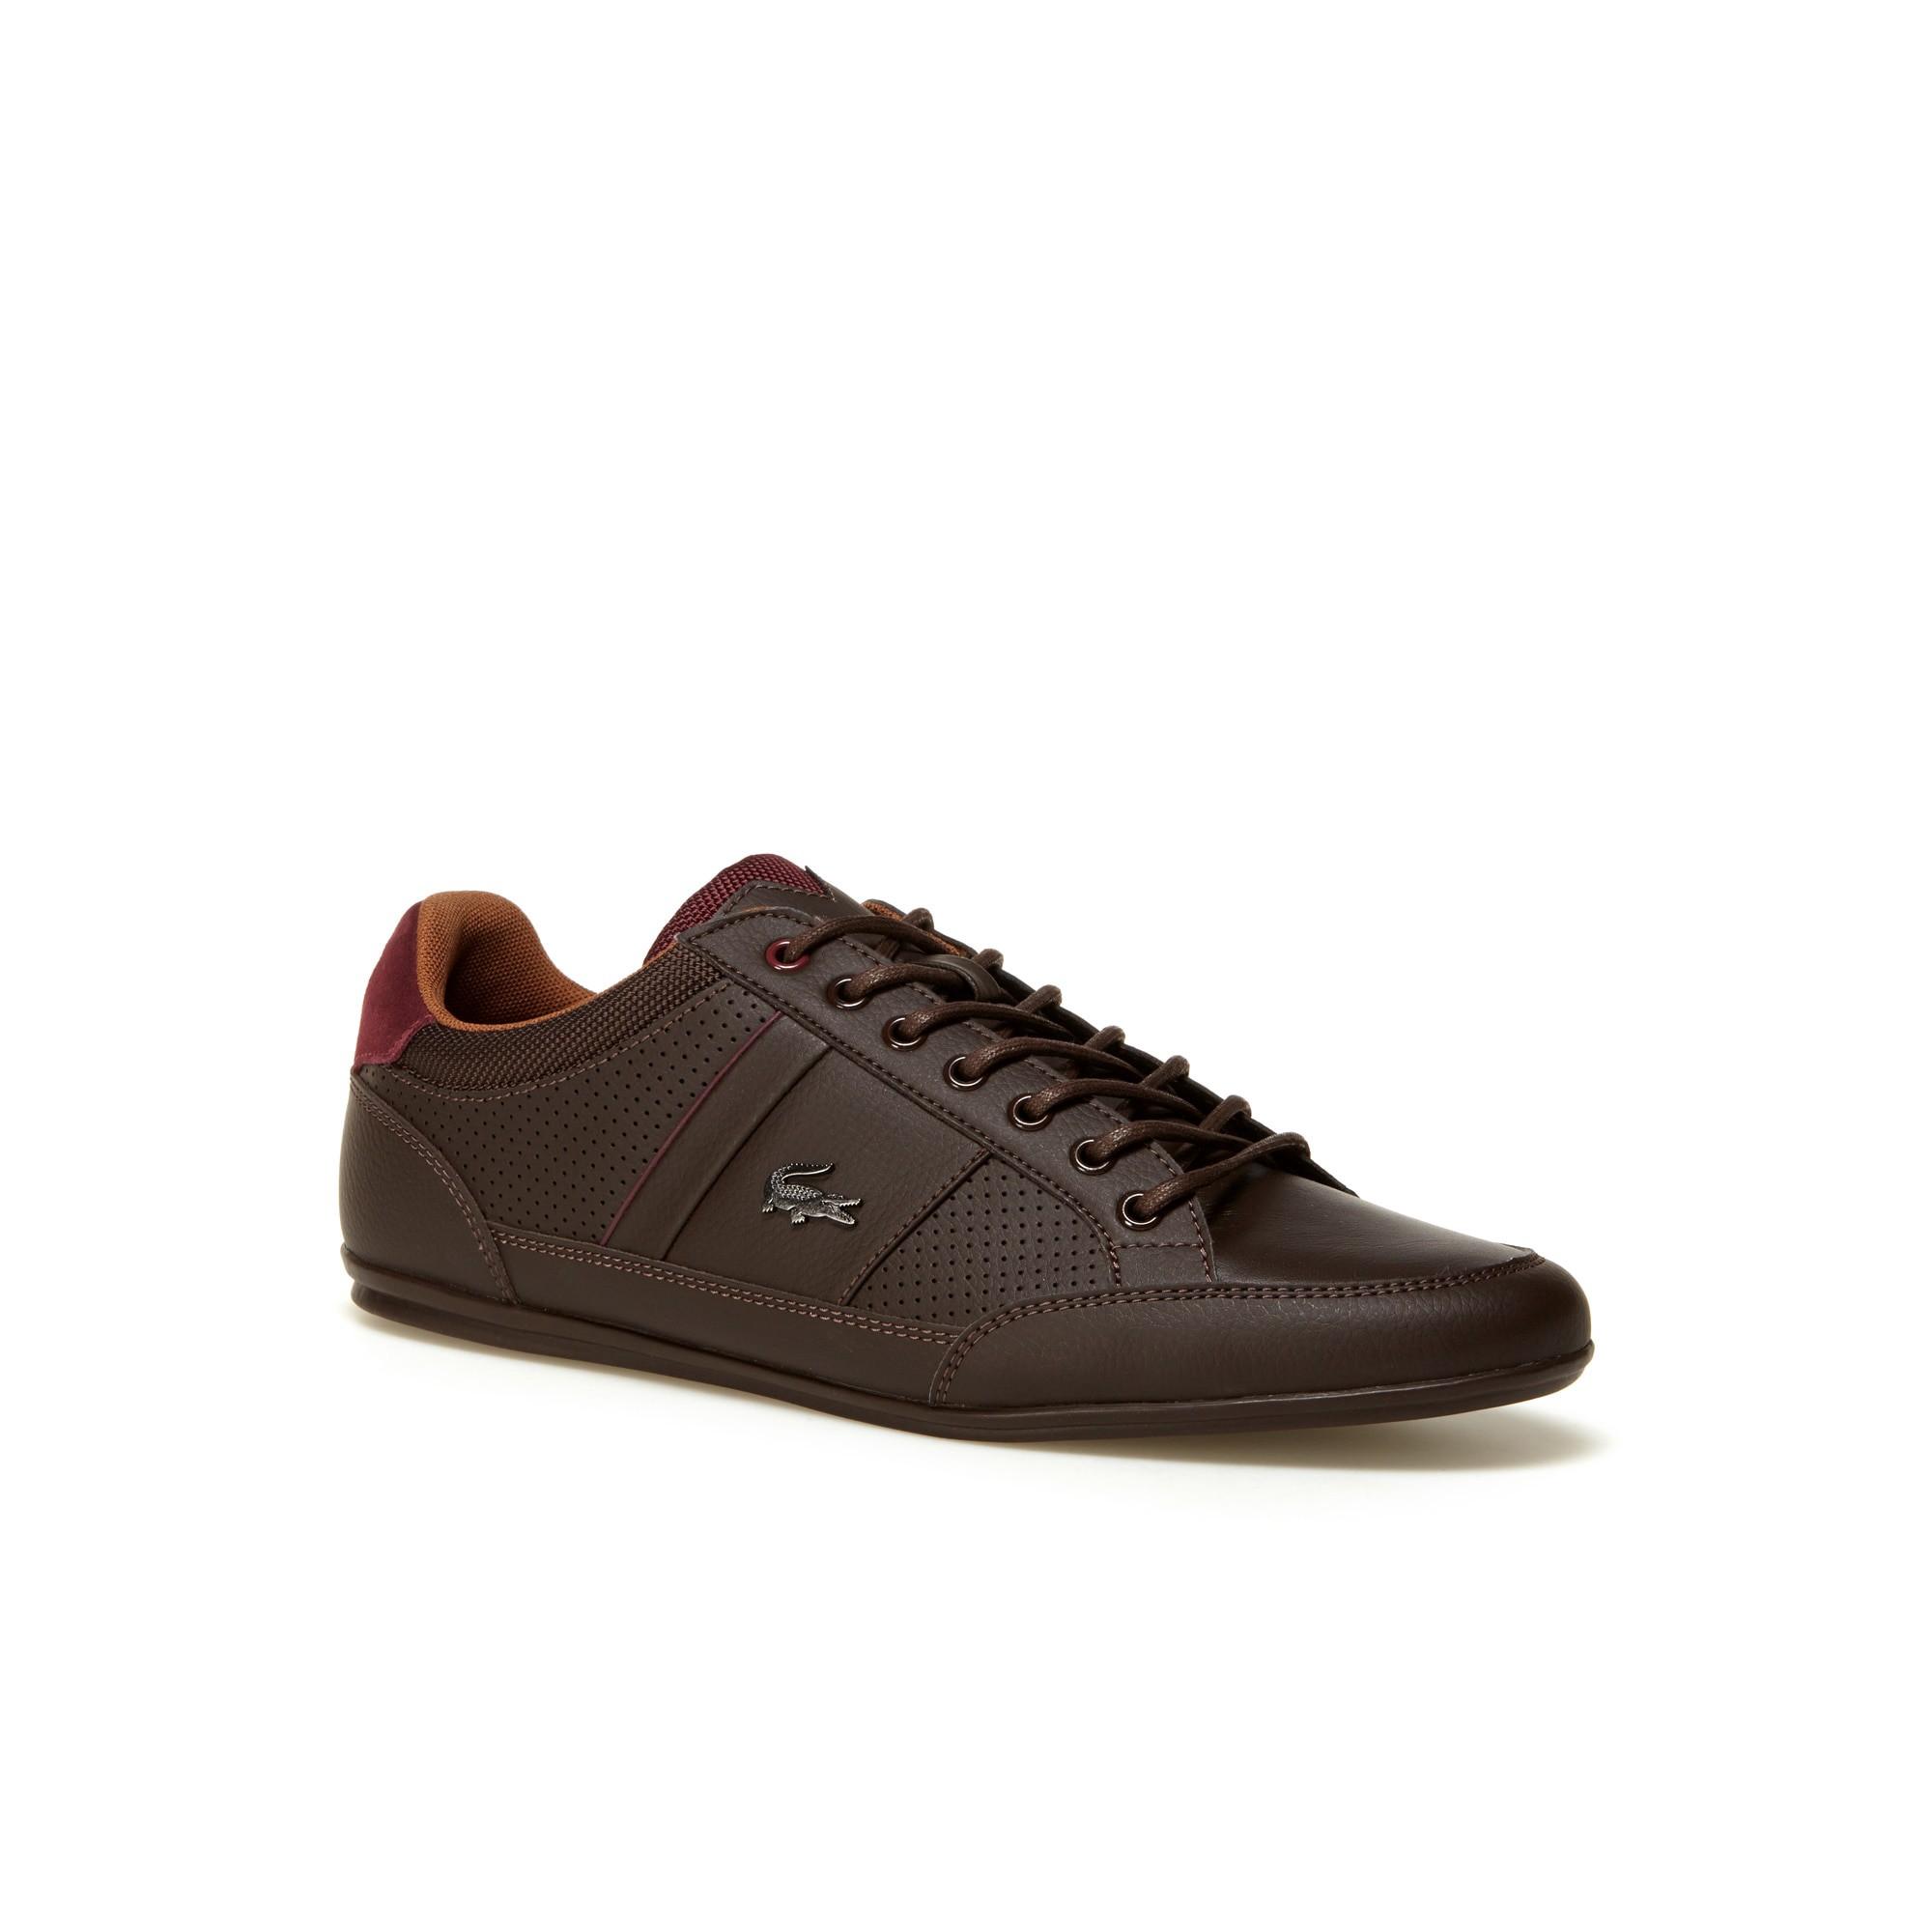 Lacoste Men's Chaymon Leather Sneakers - Dark Brown/tan | ModeSens